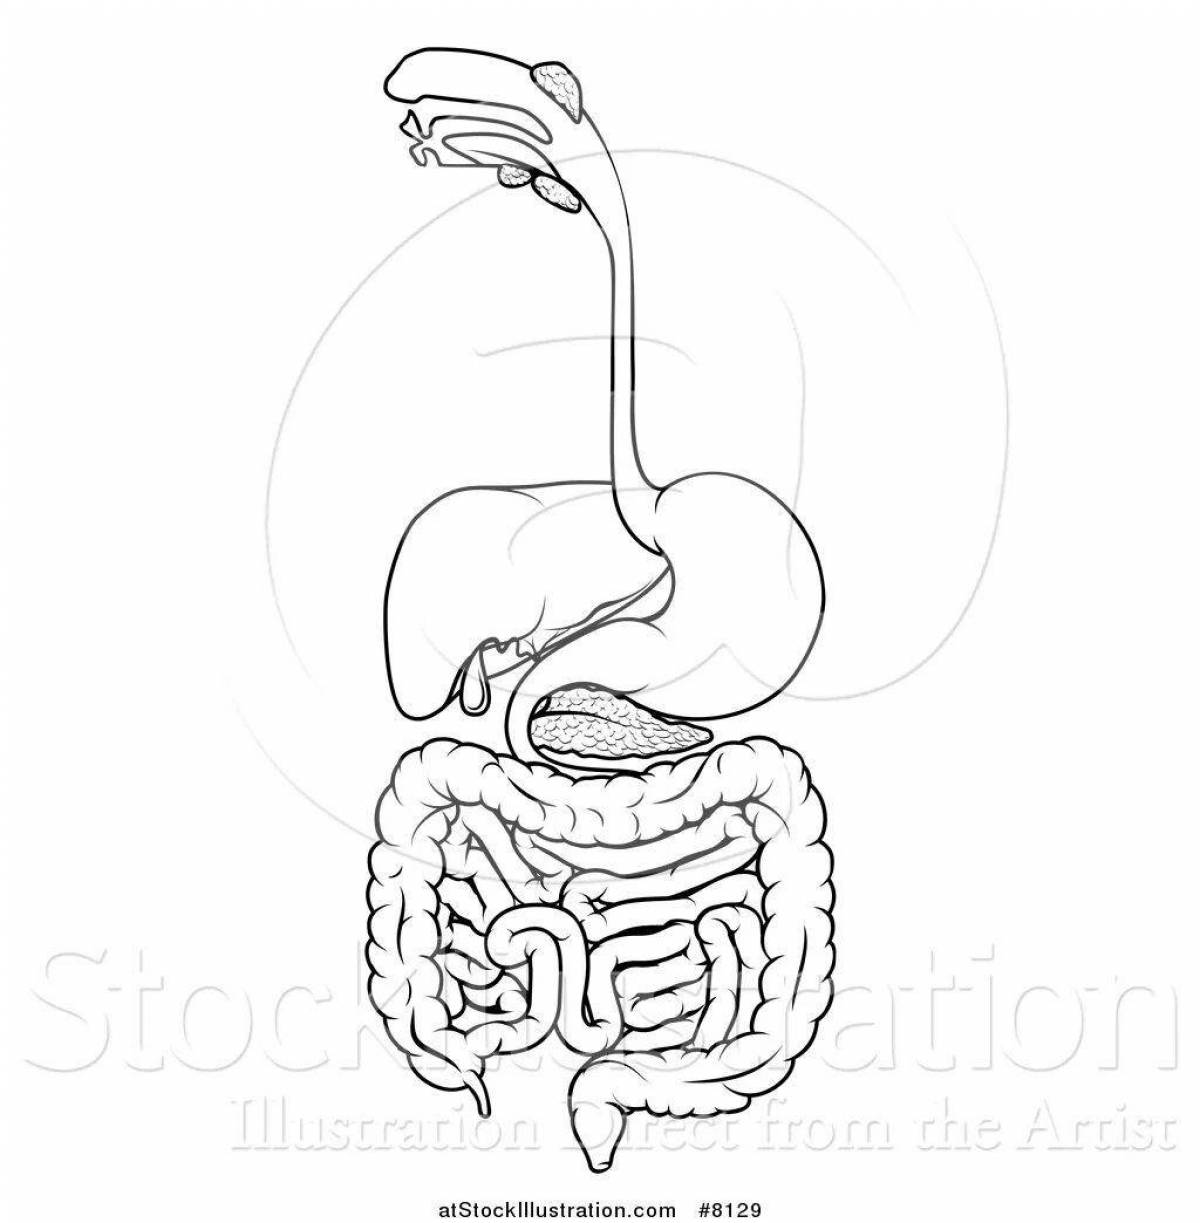 Human digestive system #13